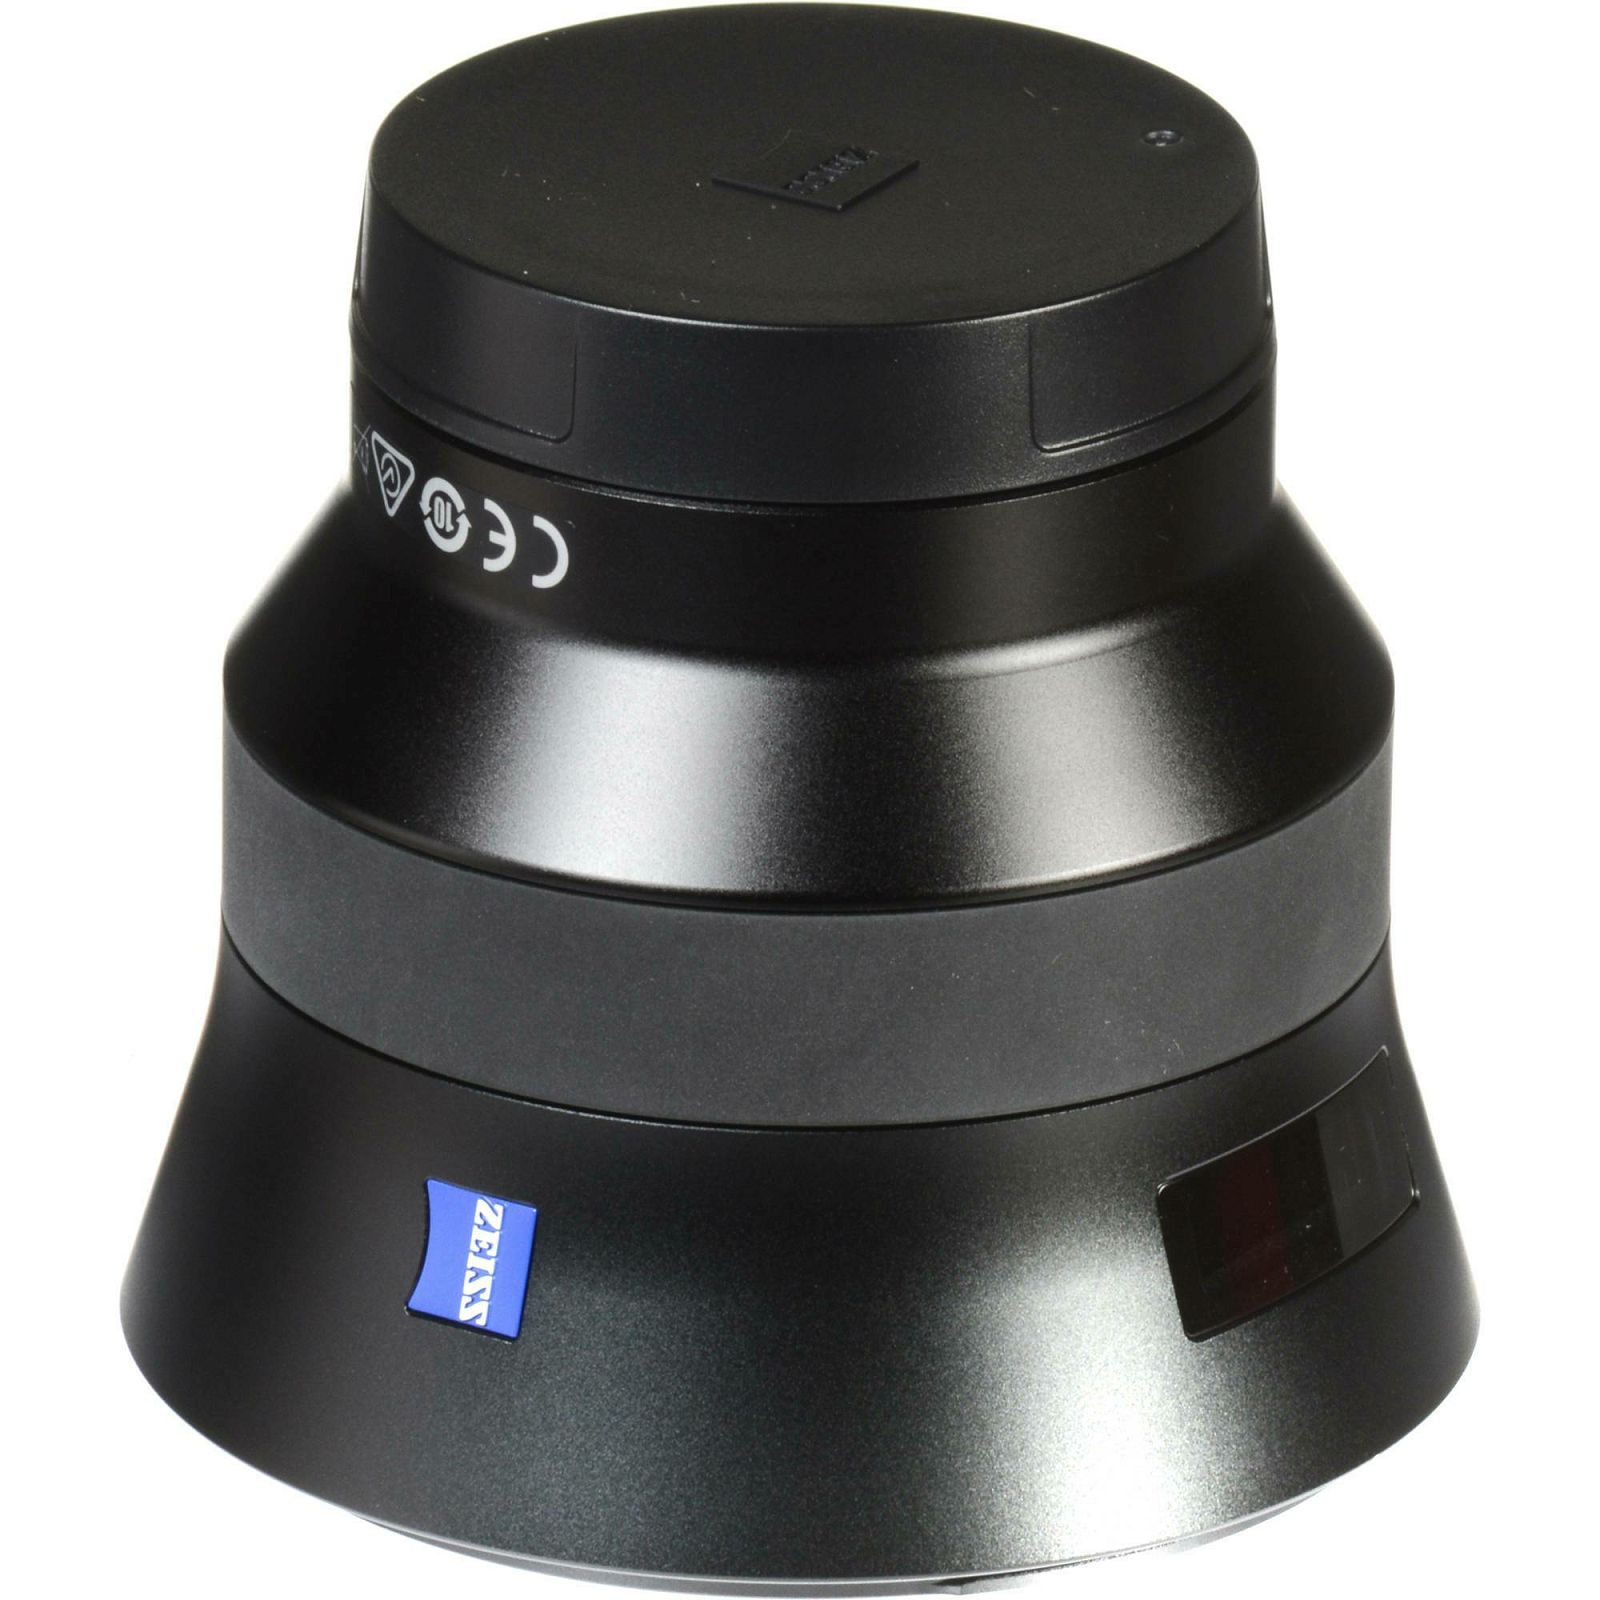 Zeiss Batis 18mm f/2.8 FE širokokutni objektiv za Sony E-mount (2136-691)